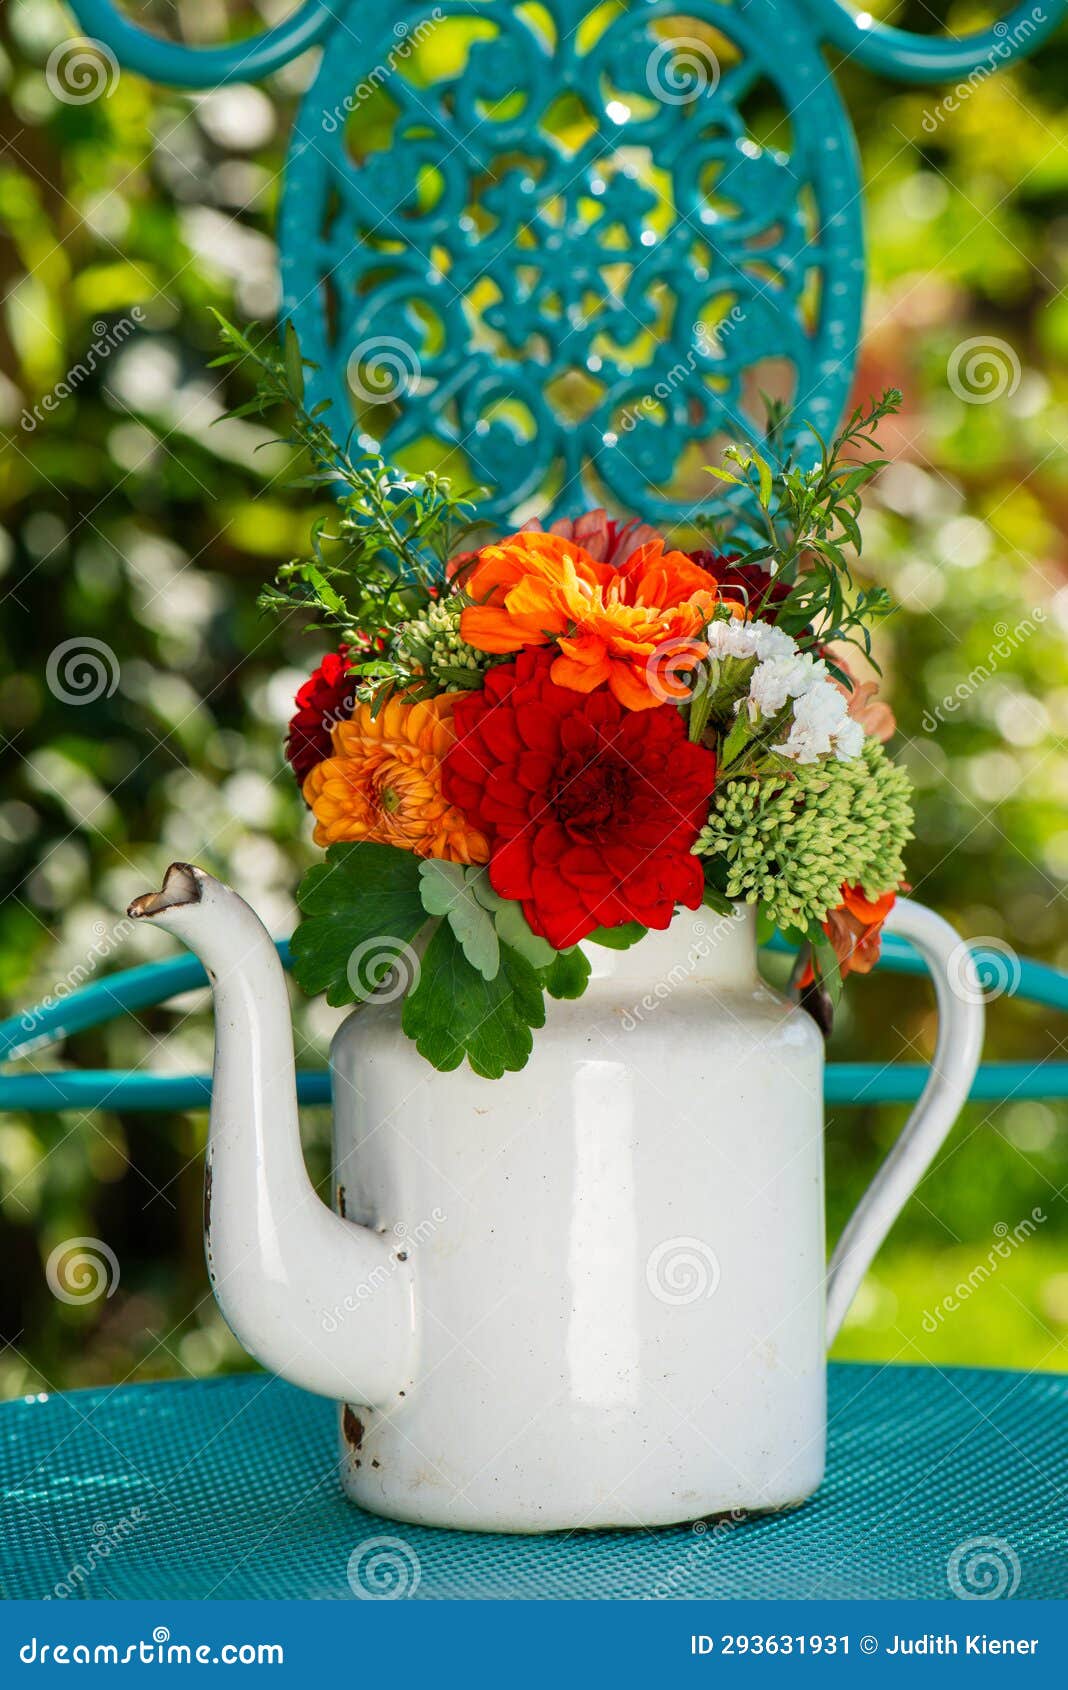 colorful flower bouquet with dalias in a enamel milk jug